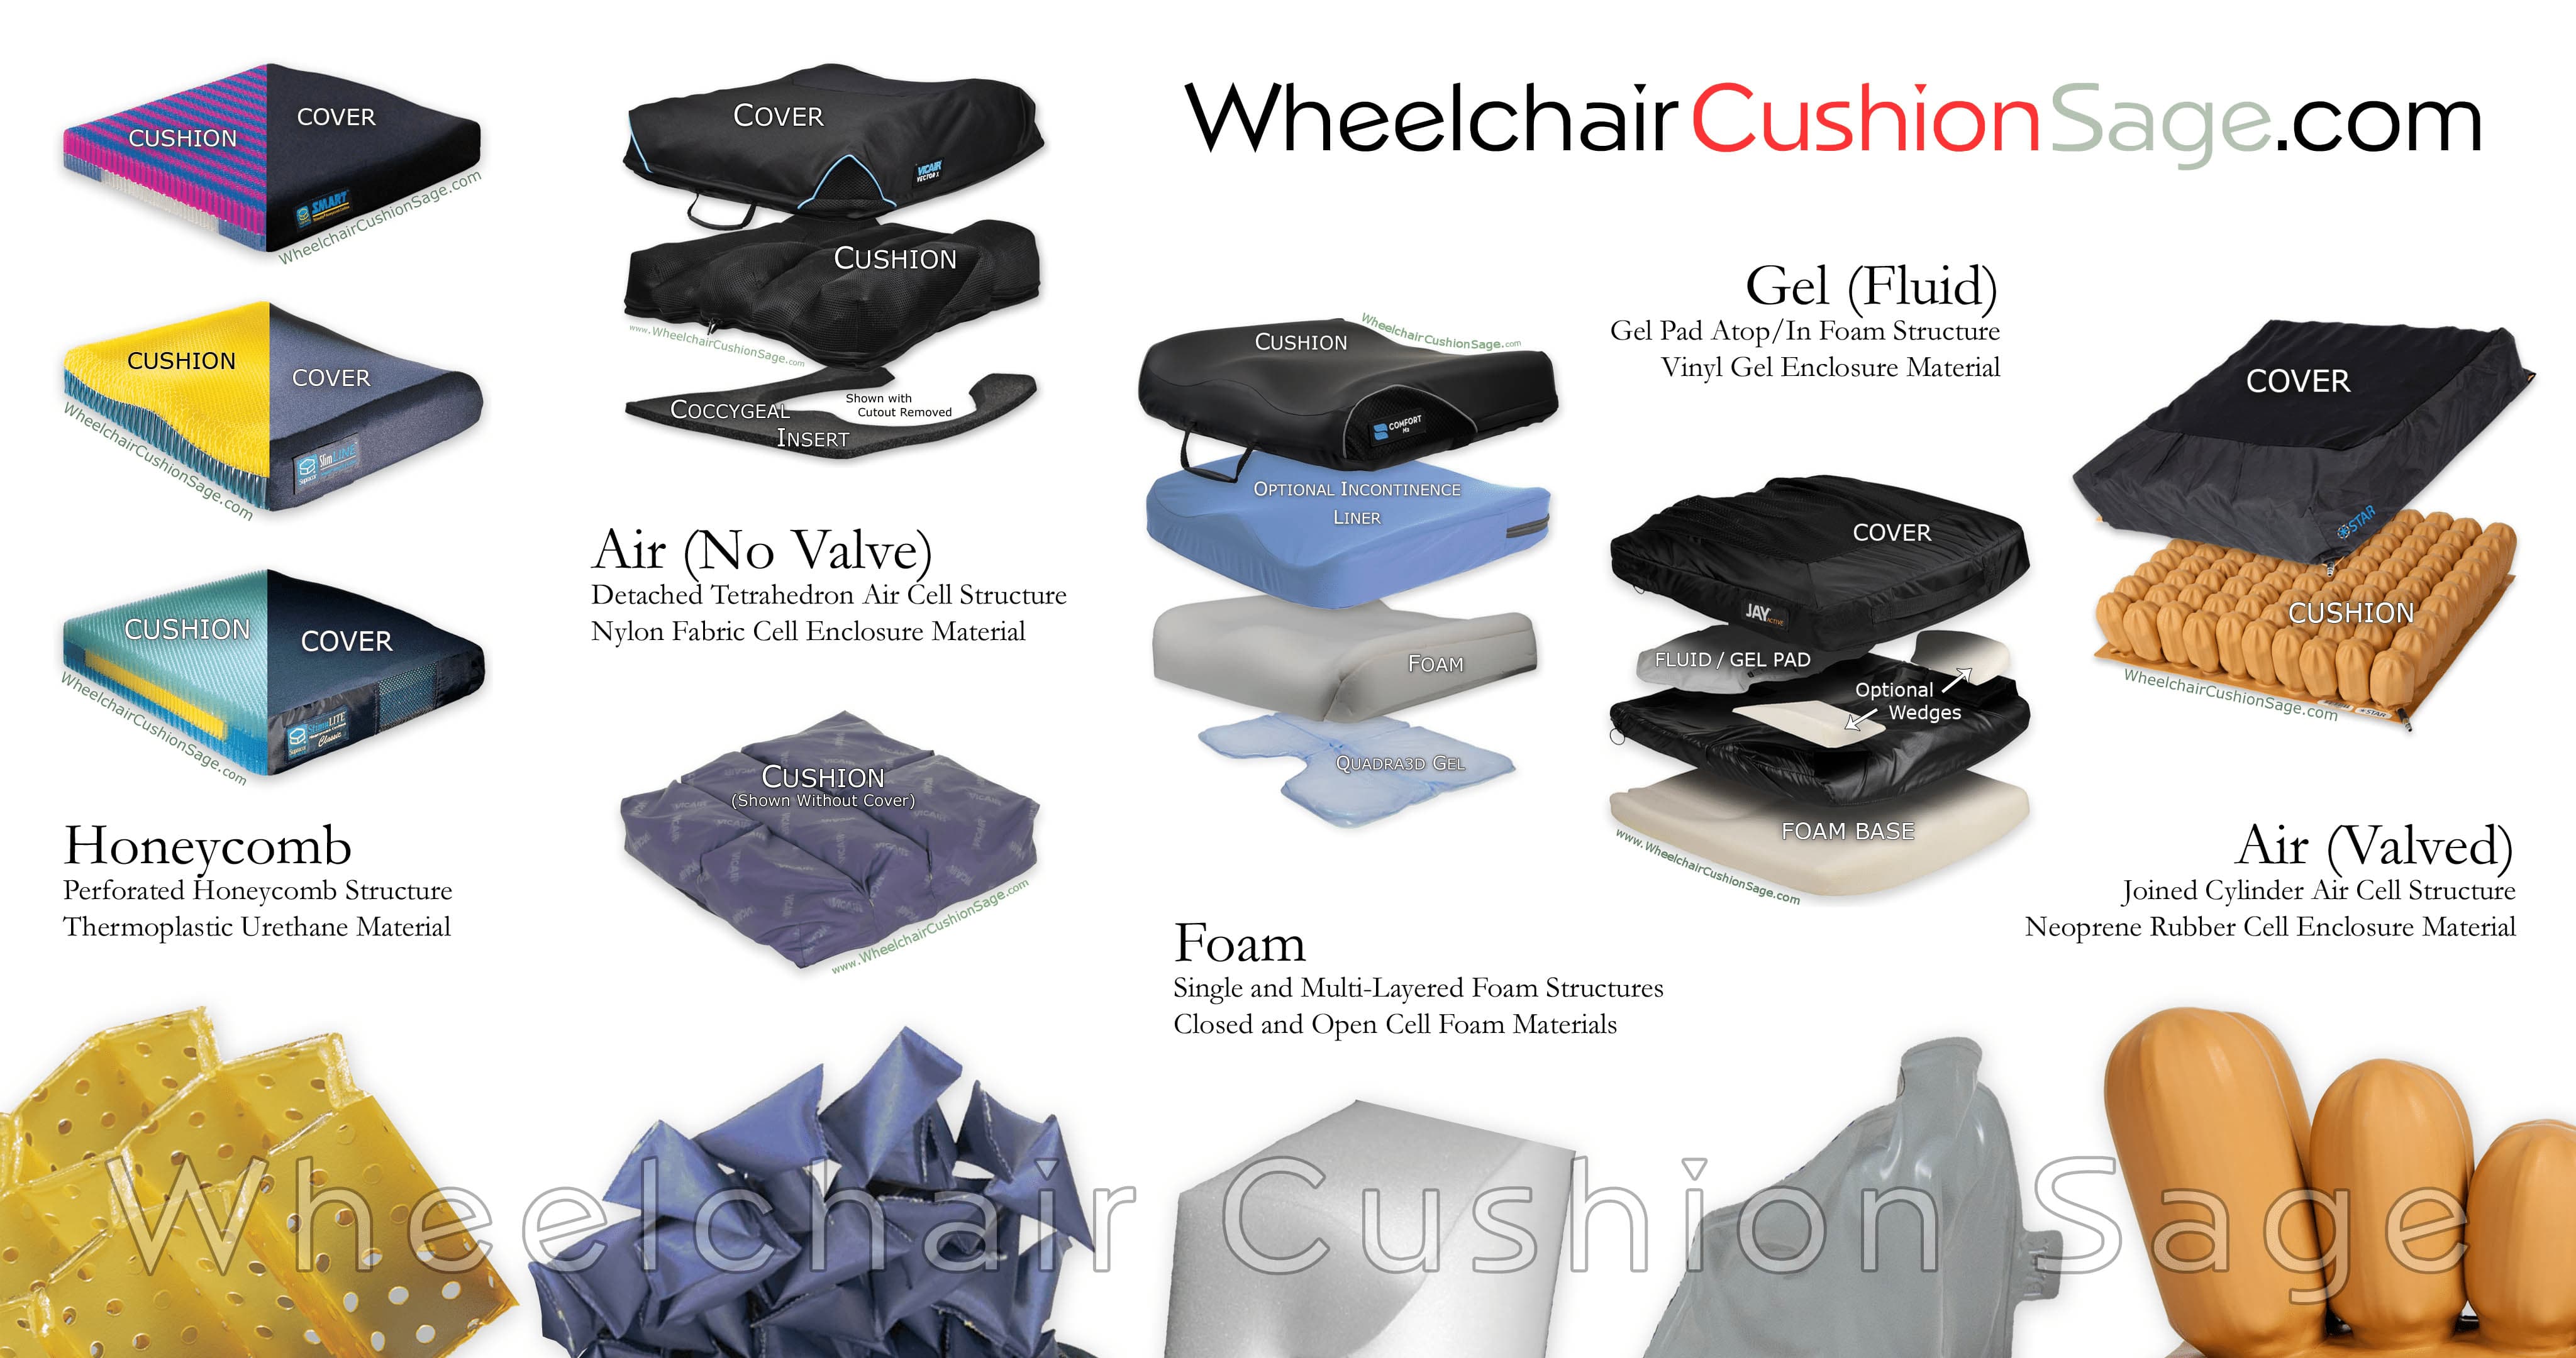 About Wheelchair Cushion Sage